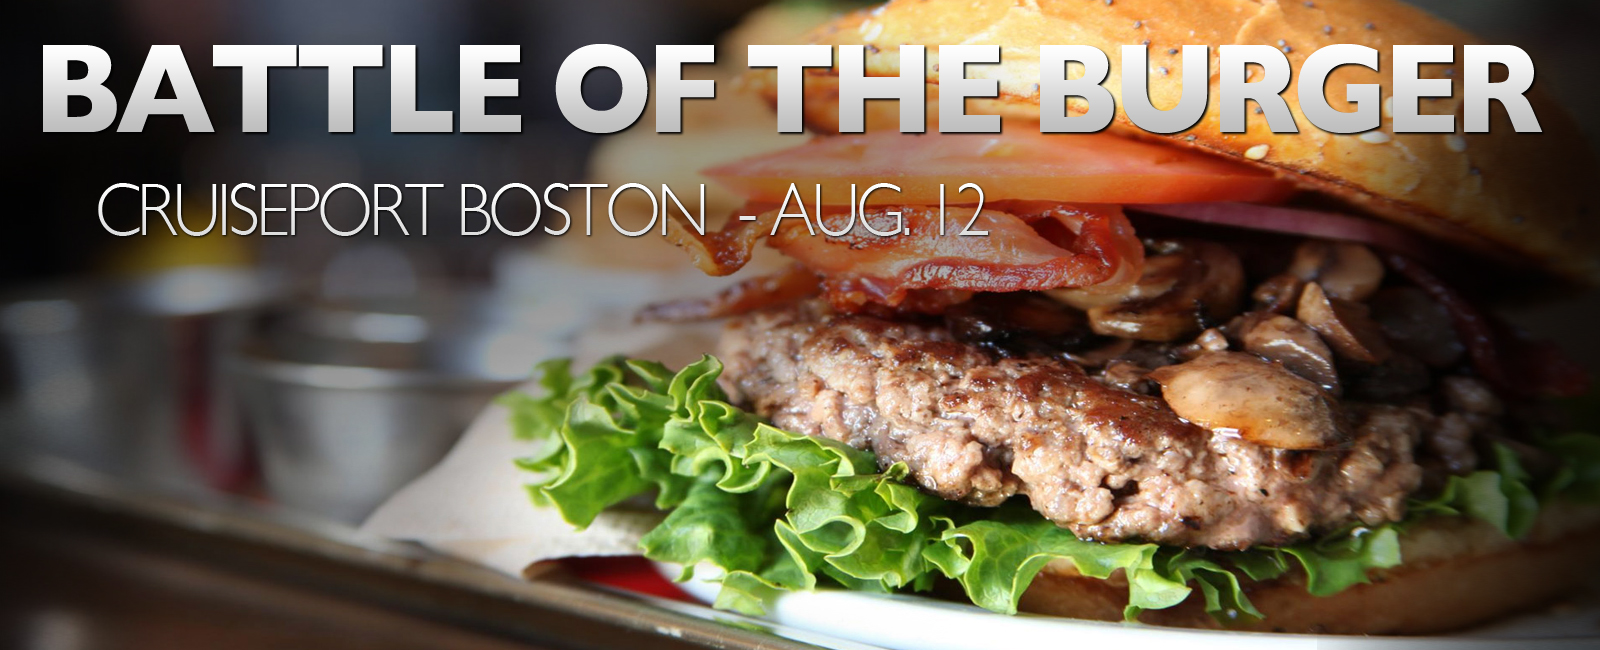 Battle of the Burger Boston August 12, 2015 WeekendPick